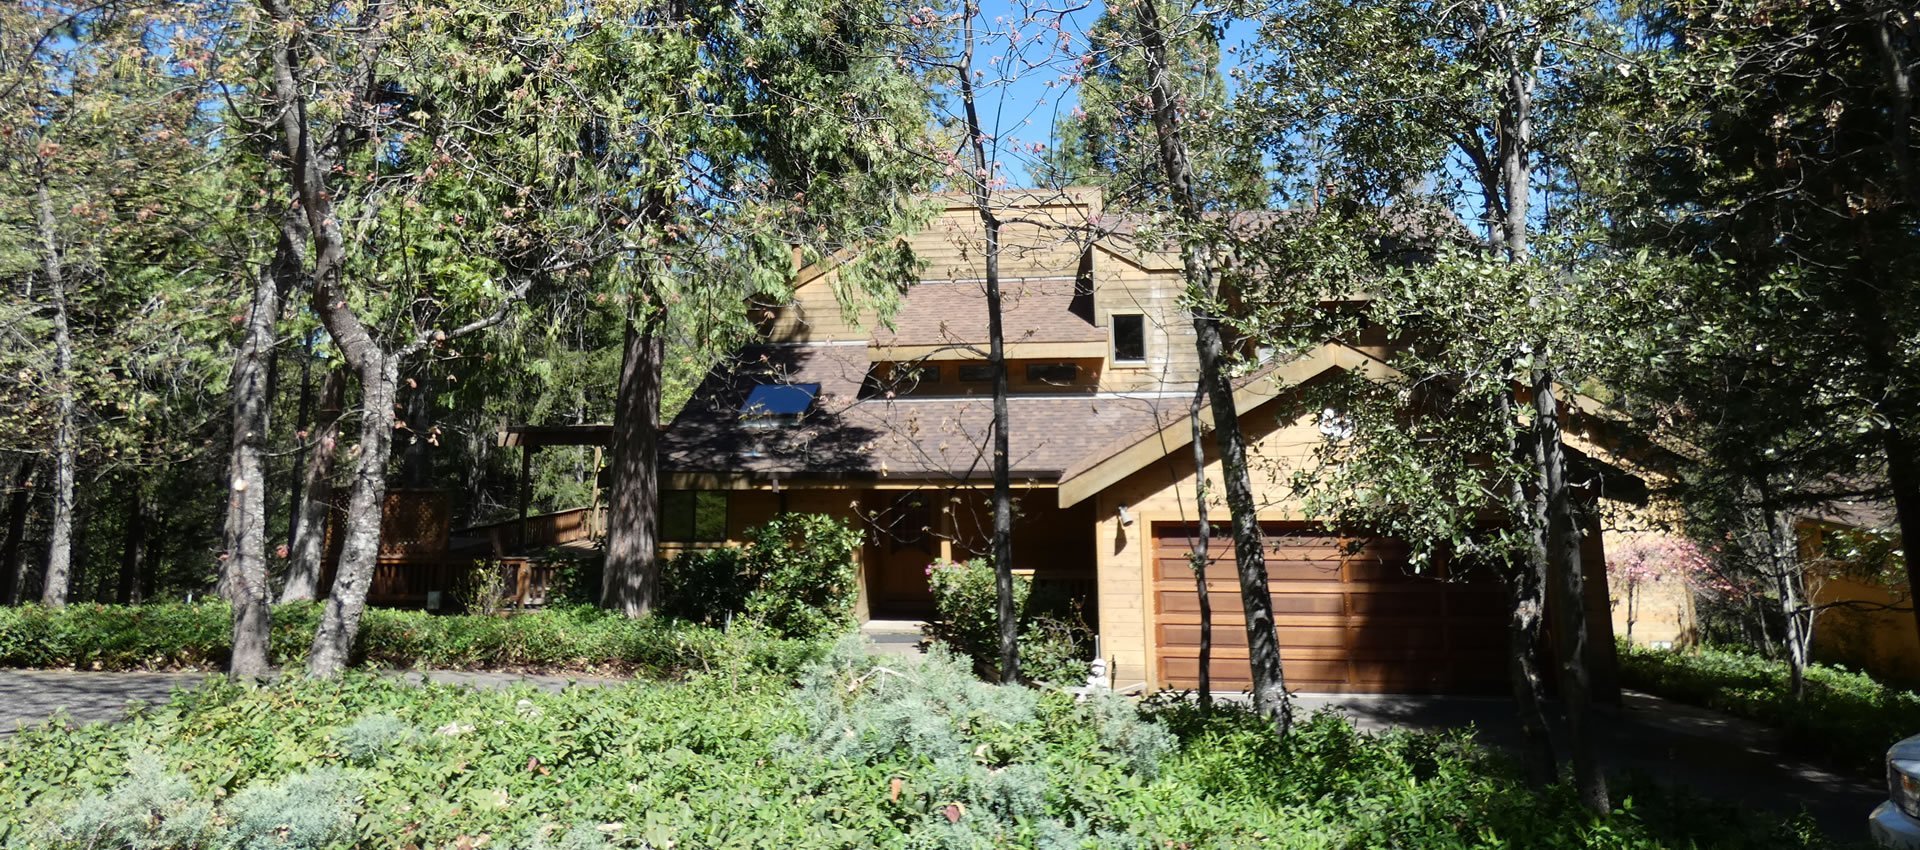 Twain Harte CA Vacation Cabin Rentals Creekwood Lodge